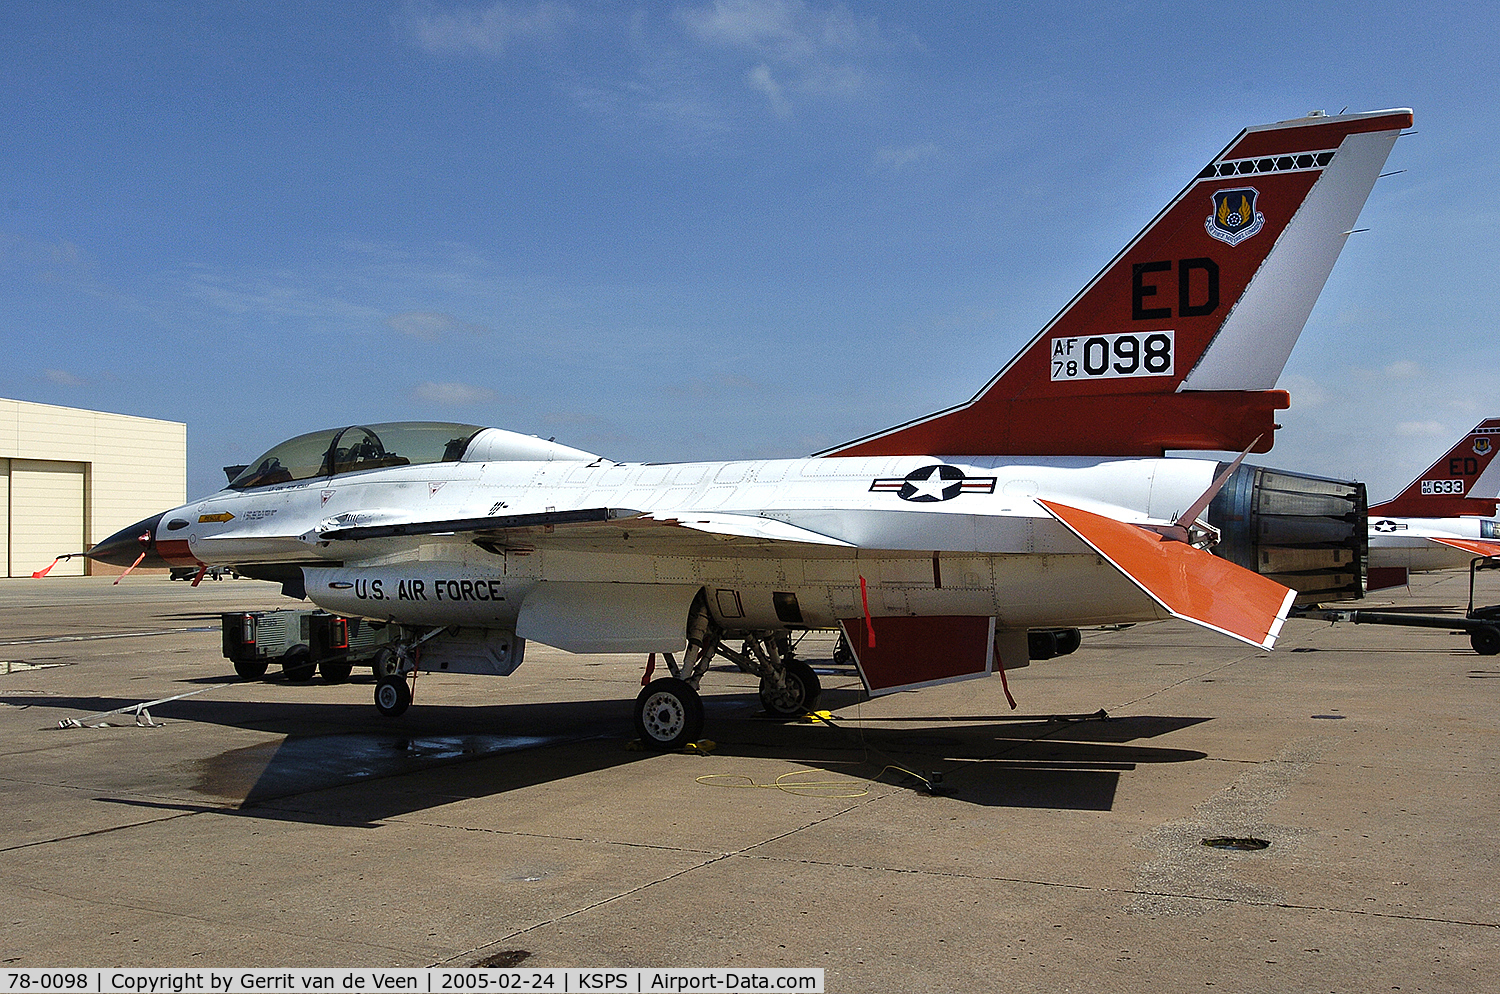 78-0098, 1978 General Dynamics F-16B Fighting Falcon C/N 62-24, at Sheppard still in ED marks